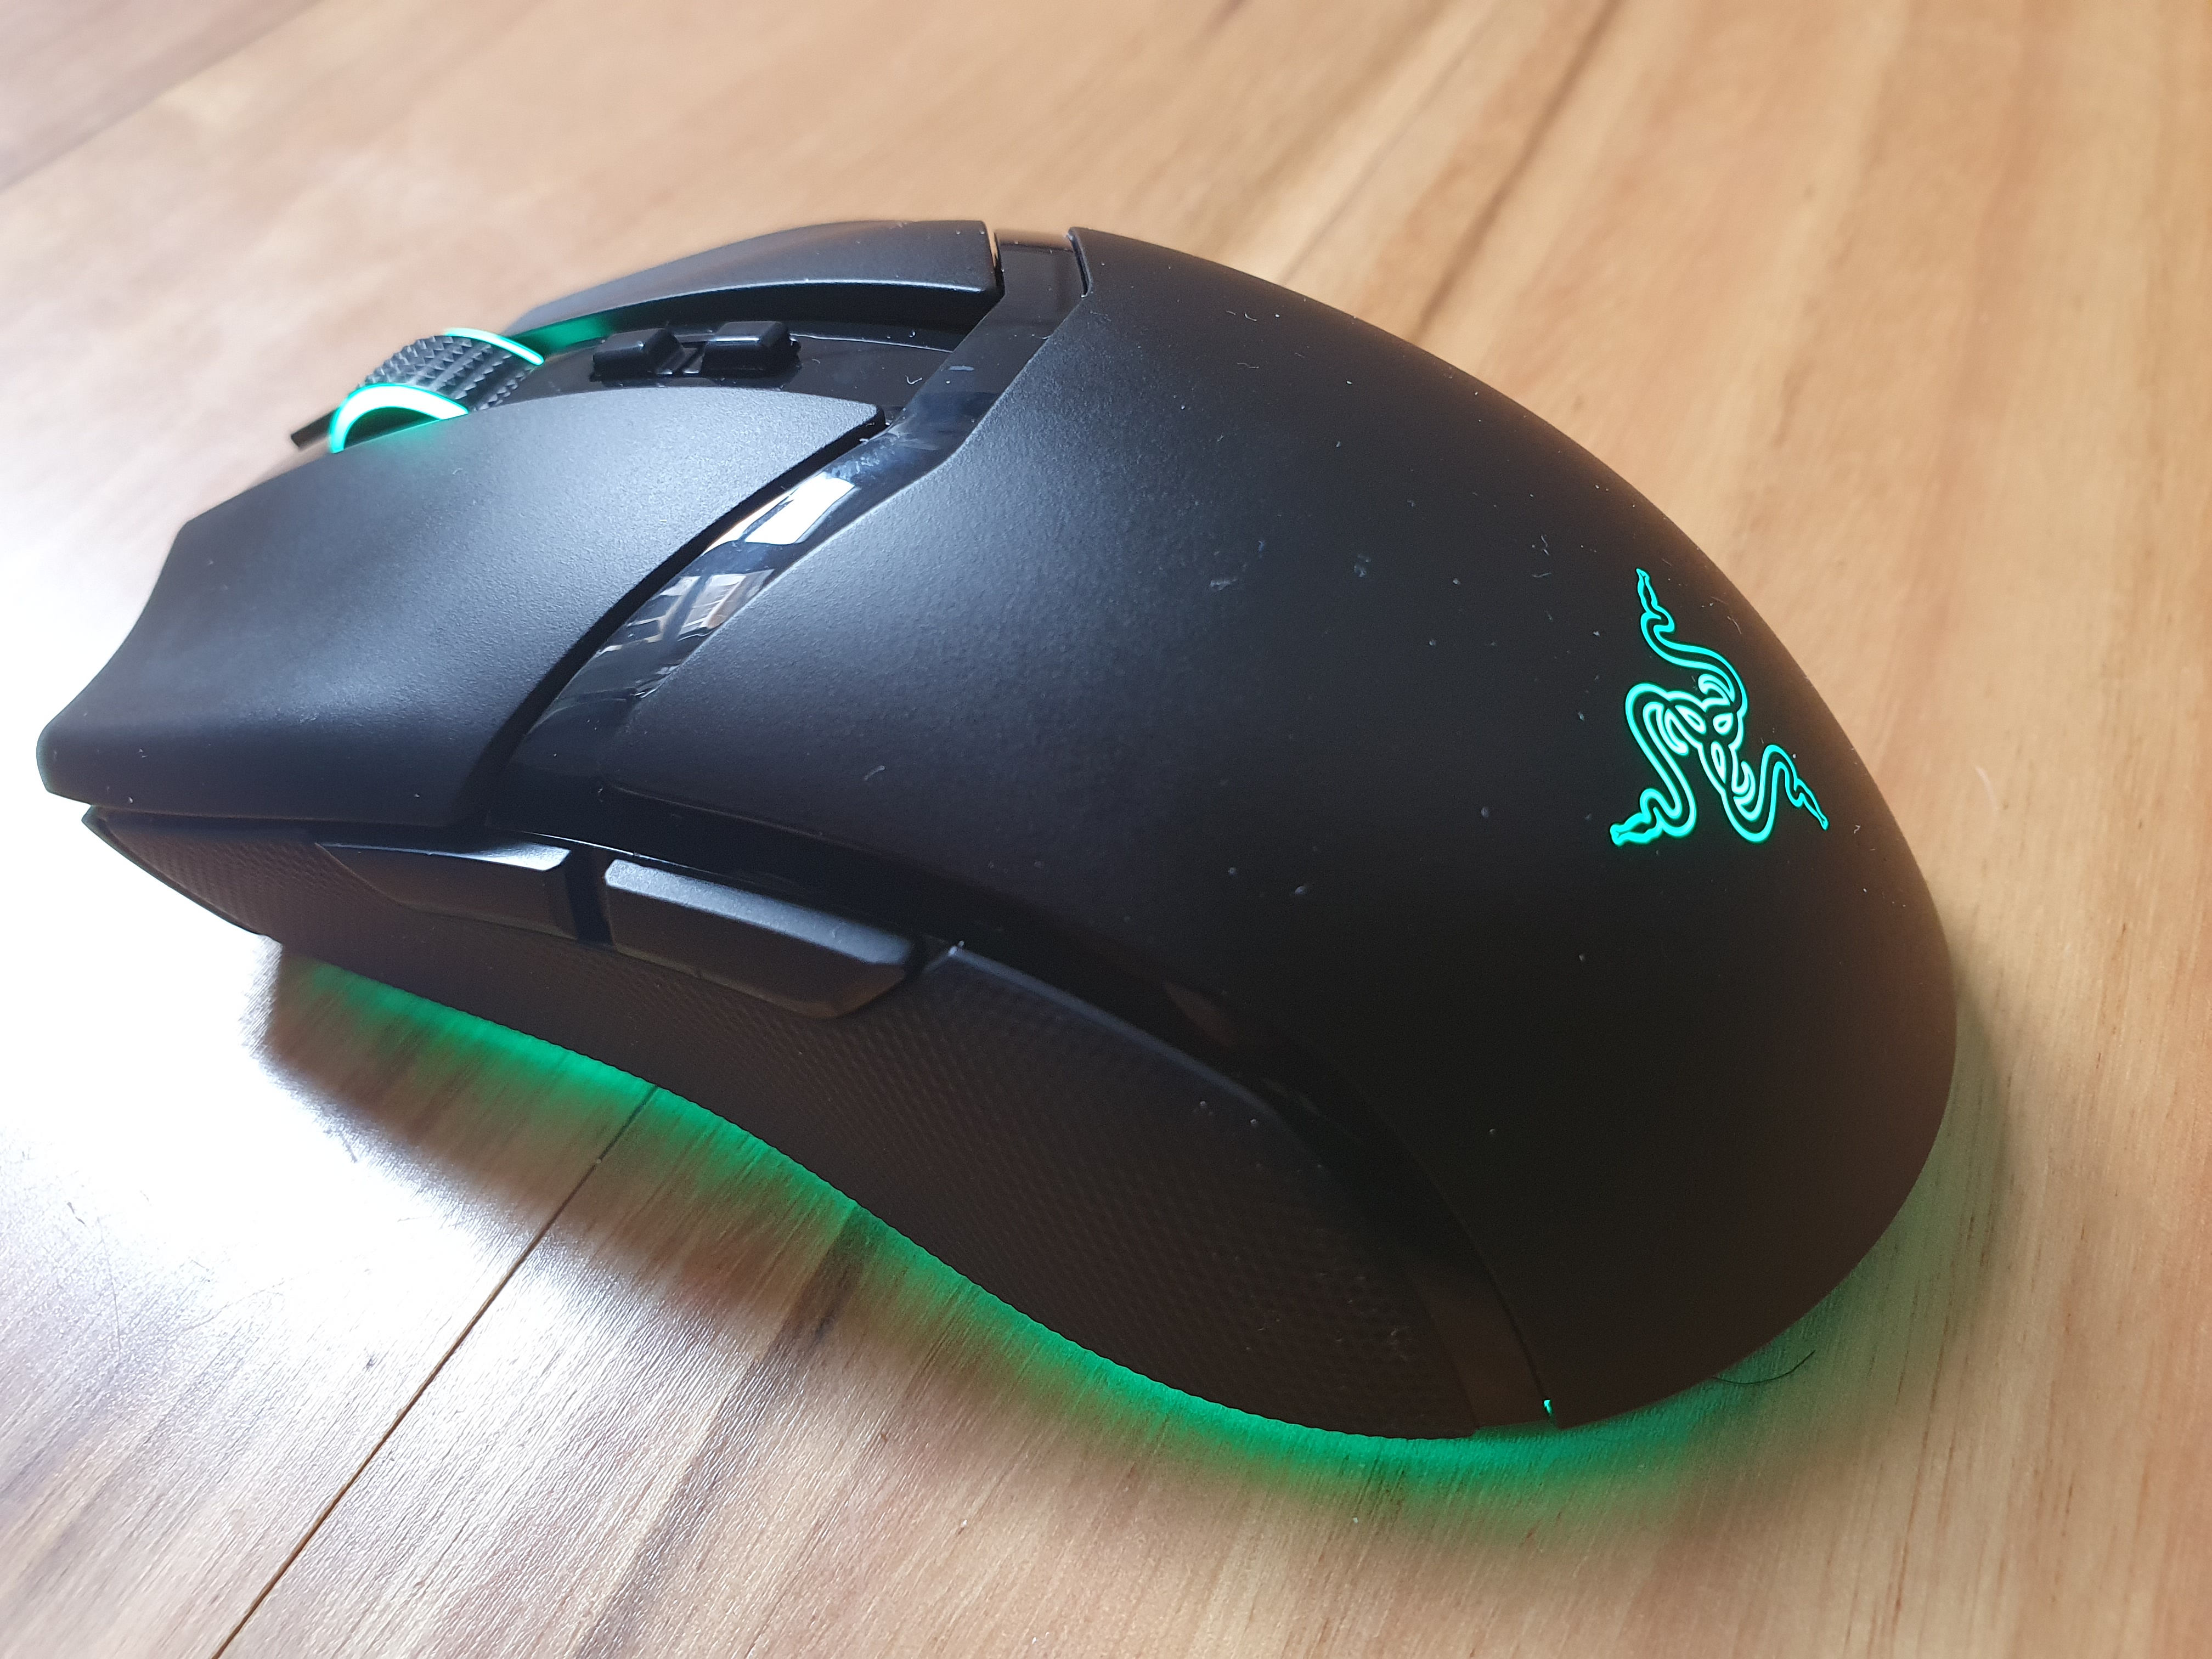 Razer Cobra Pro - Best wireless mouse for gaming